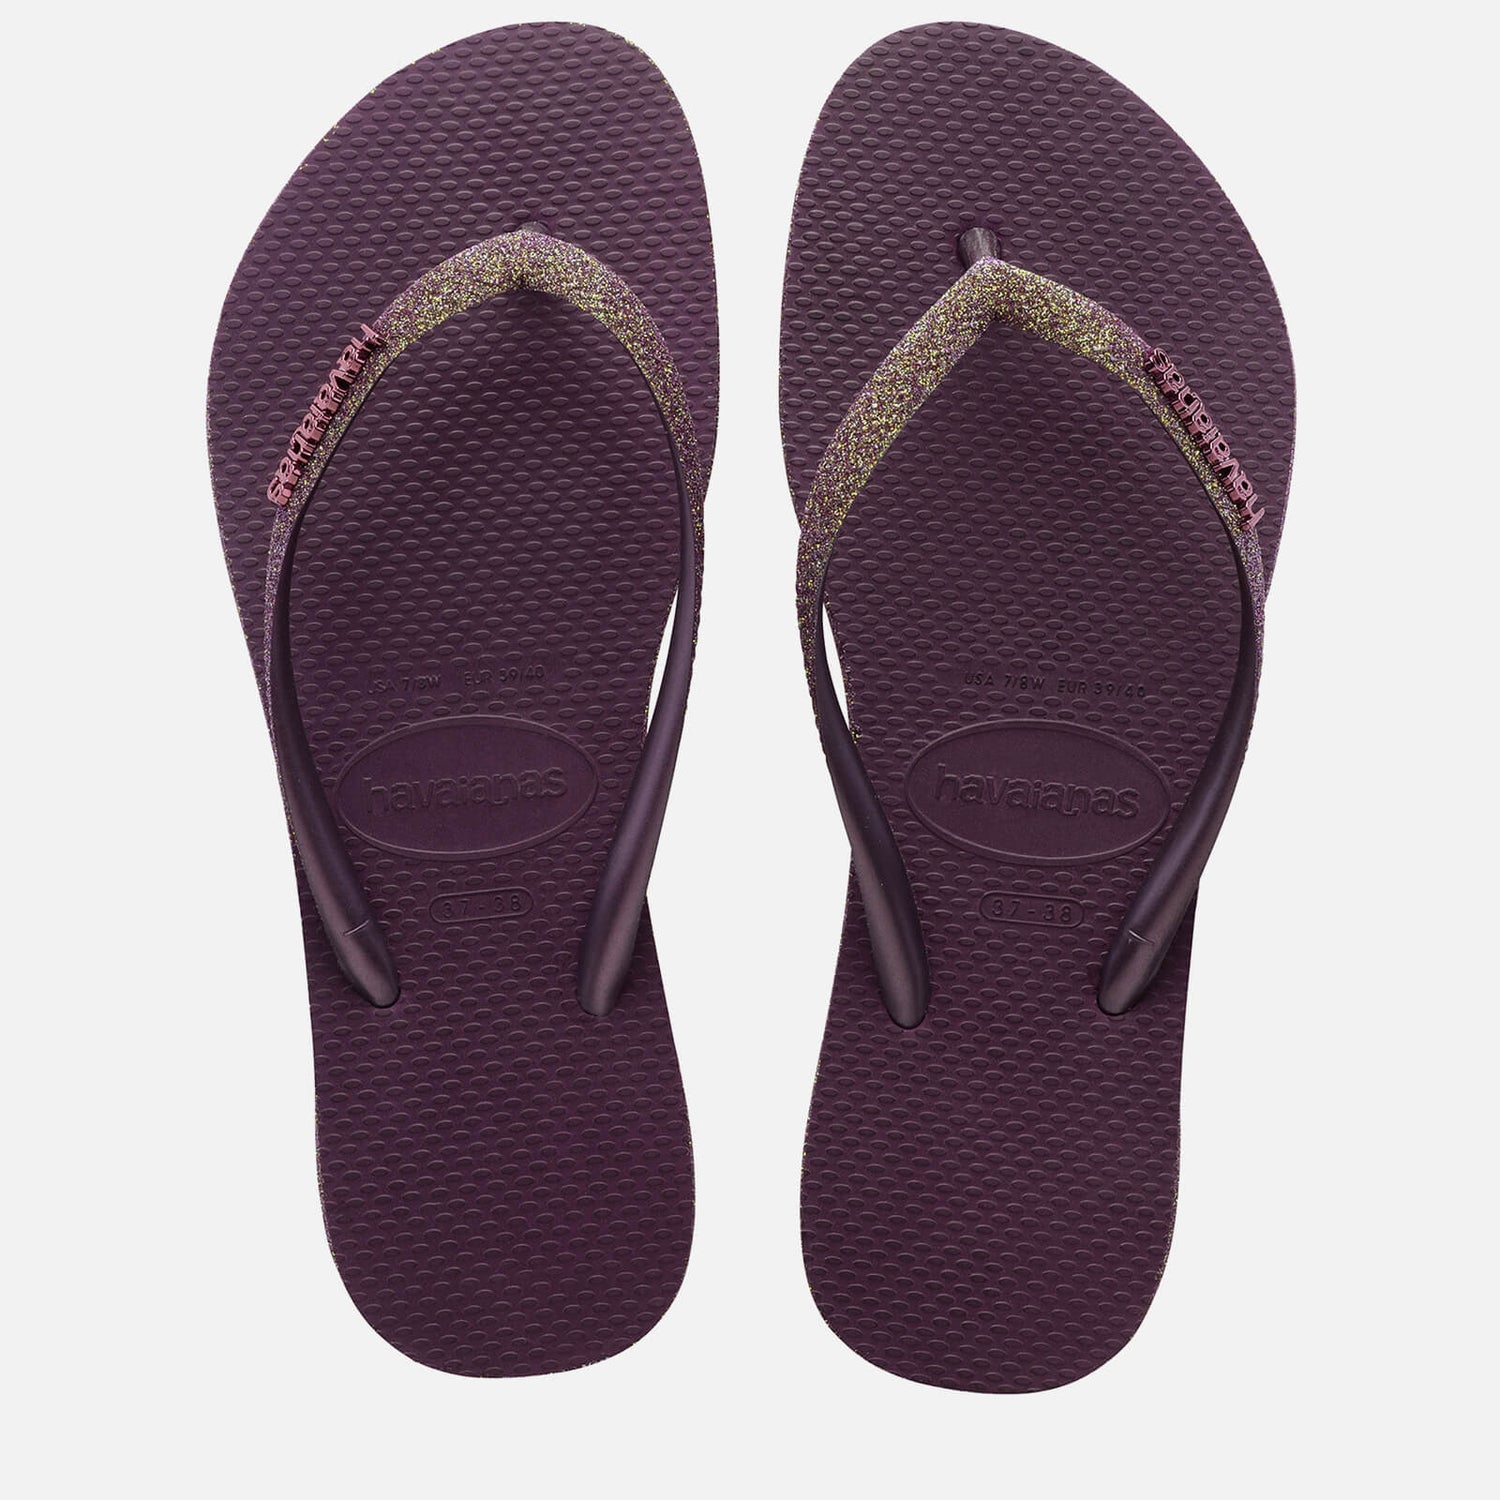 Havaianas Women's Slim Sparkle Ii Flip Flops - Aubergine - UK 3/4